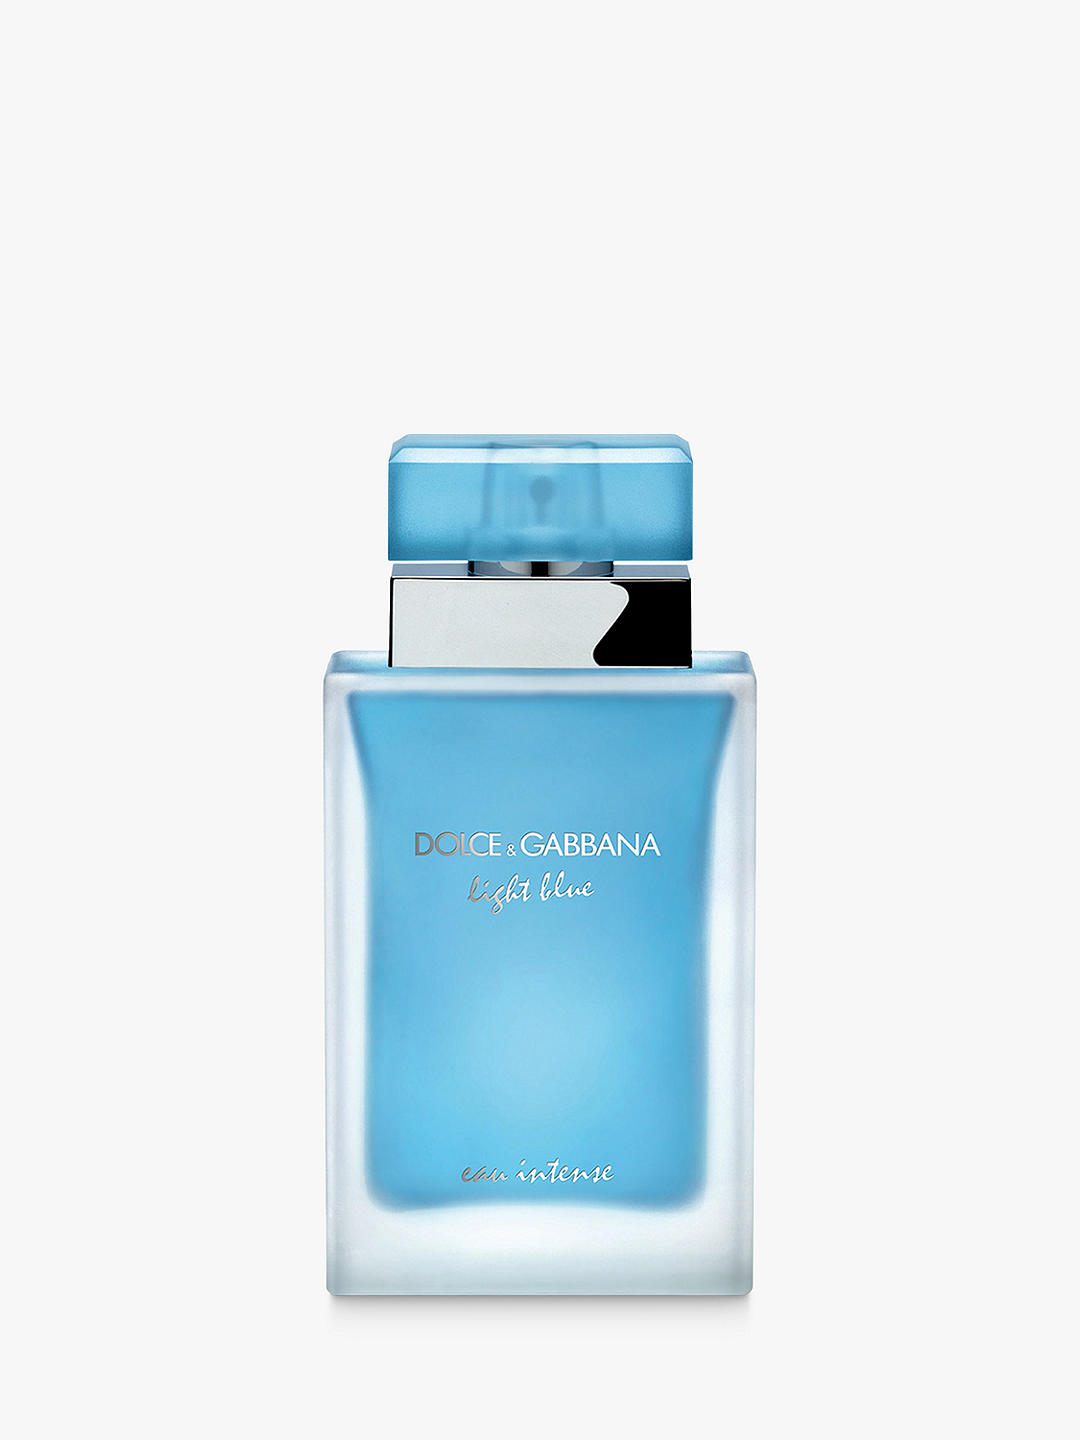 Dolce & Gabbana Light Blue Eau Intense Eau de Parfum at